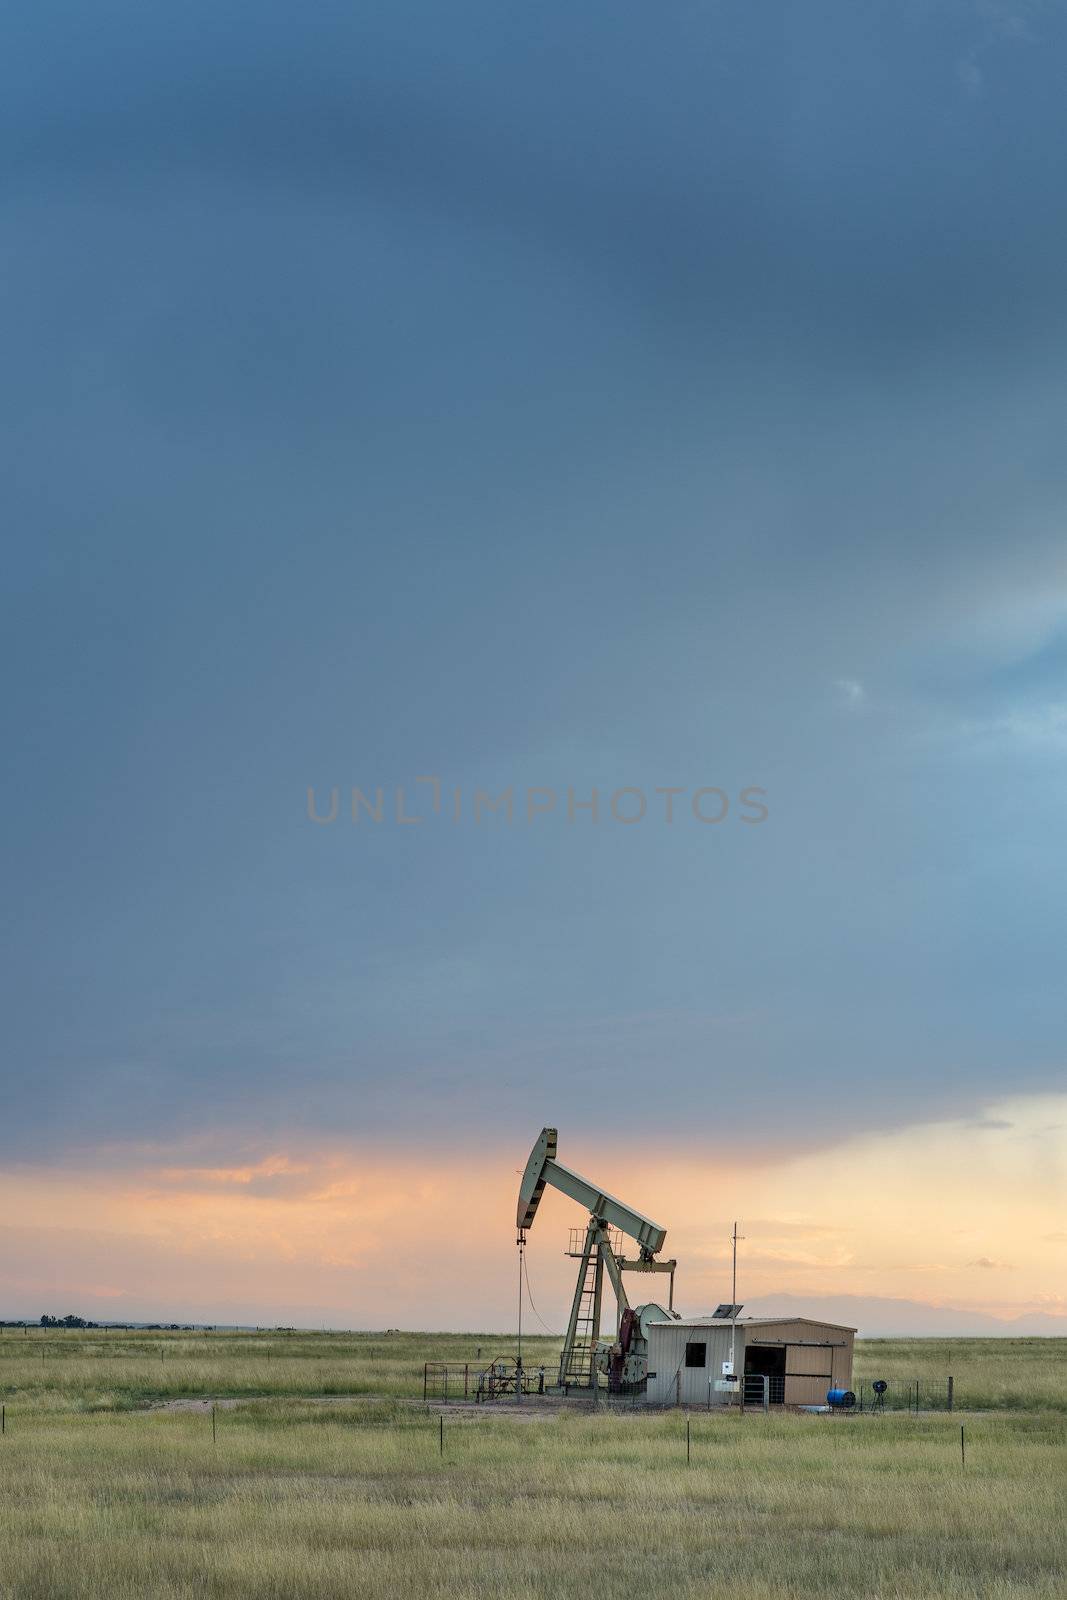 oil rug (pumpjack) against stormy sunset sky in Pawnee National Grassland near Grover, Colorado